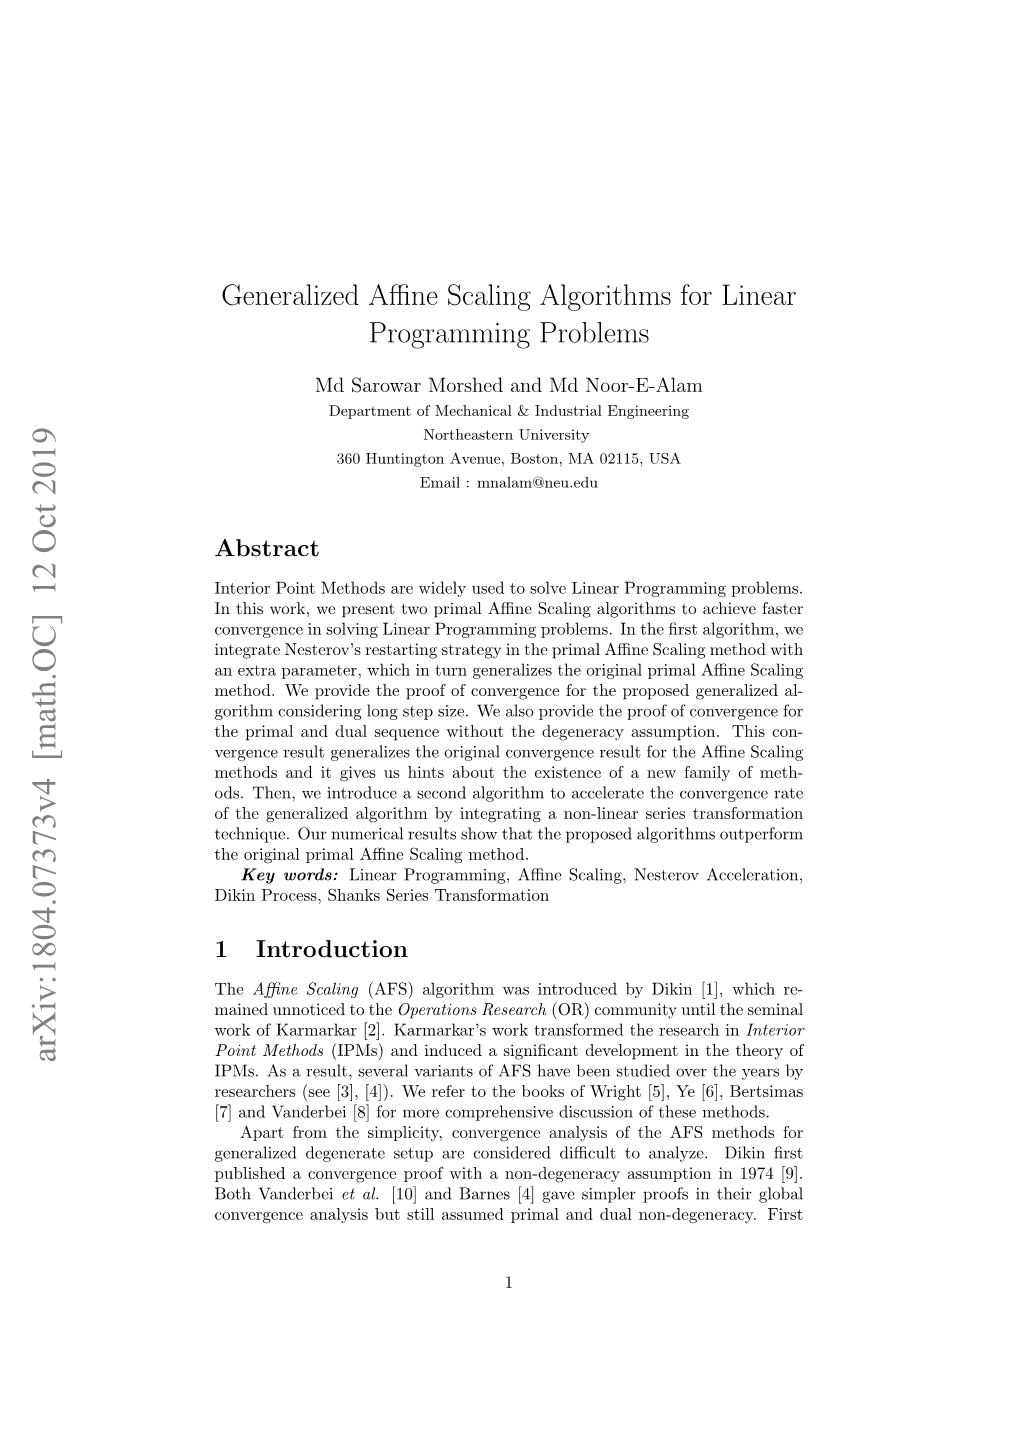 Generalized Affine Scaling Algorithms for Linear Programming Problems